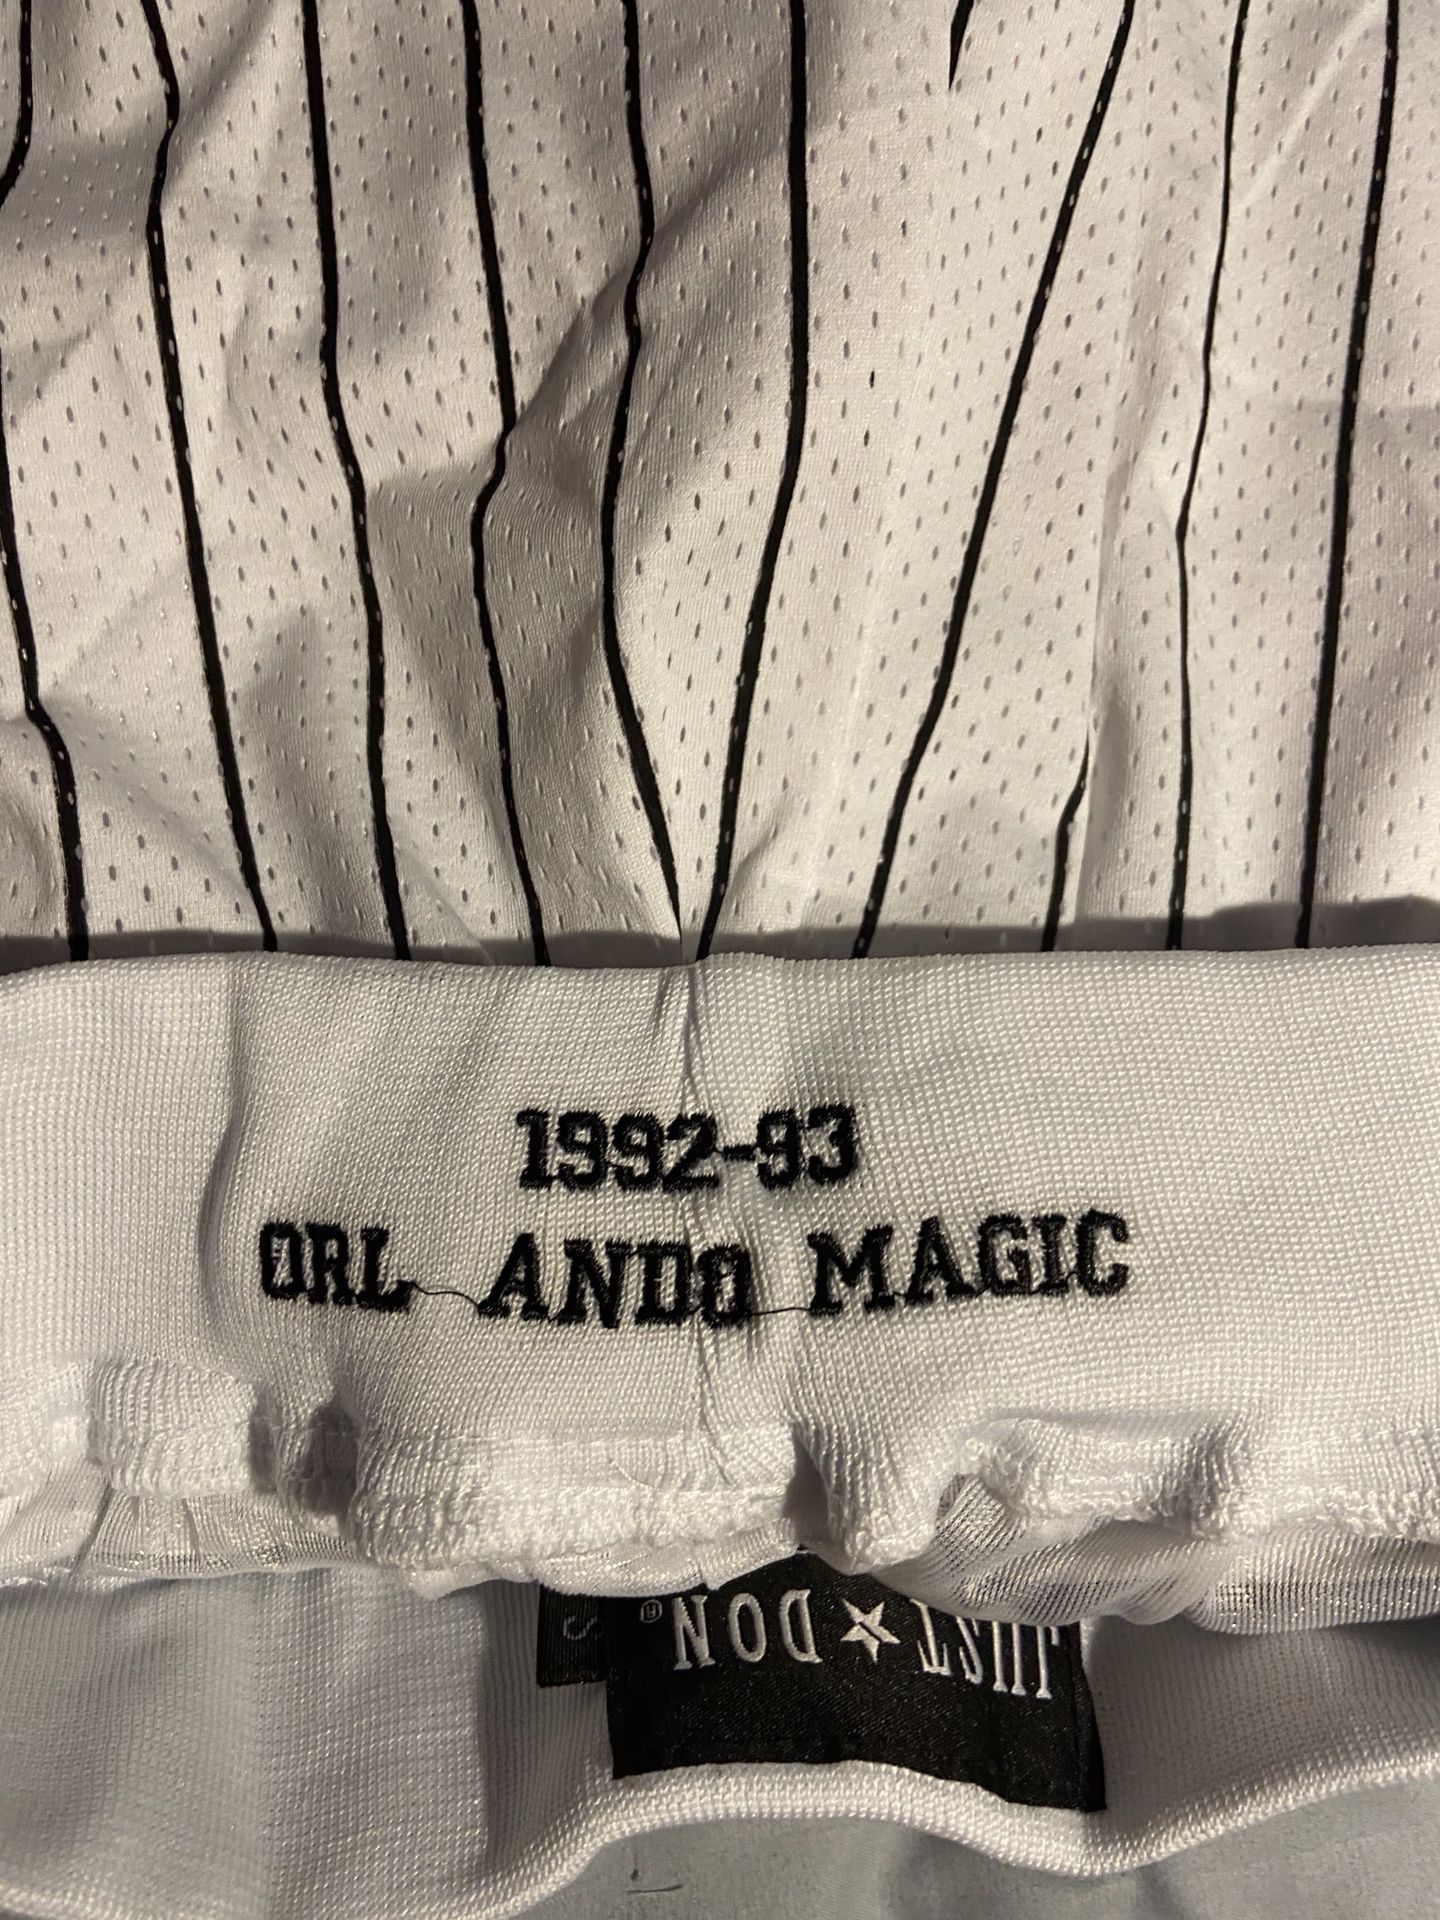 ORLANDO MAGIC – JUST DON